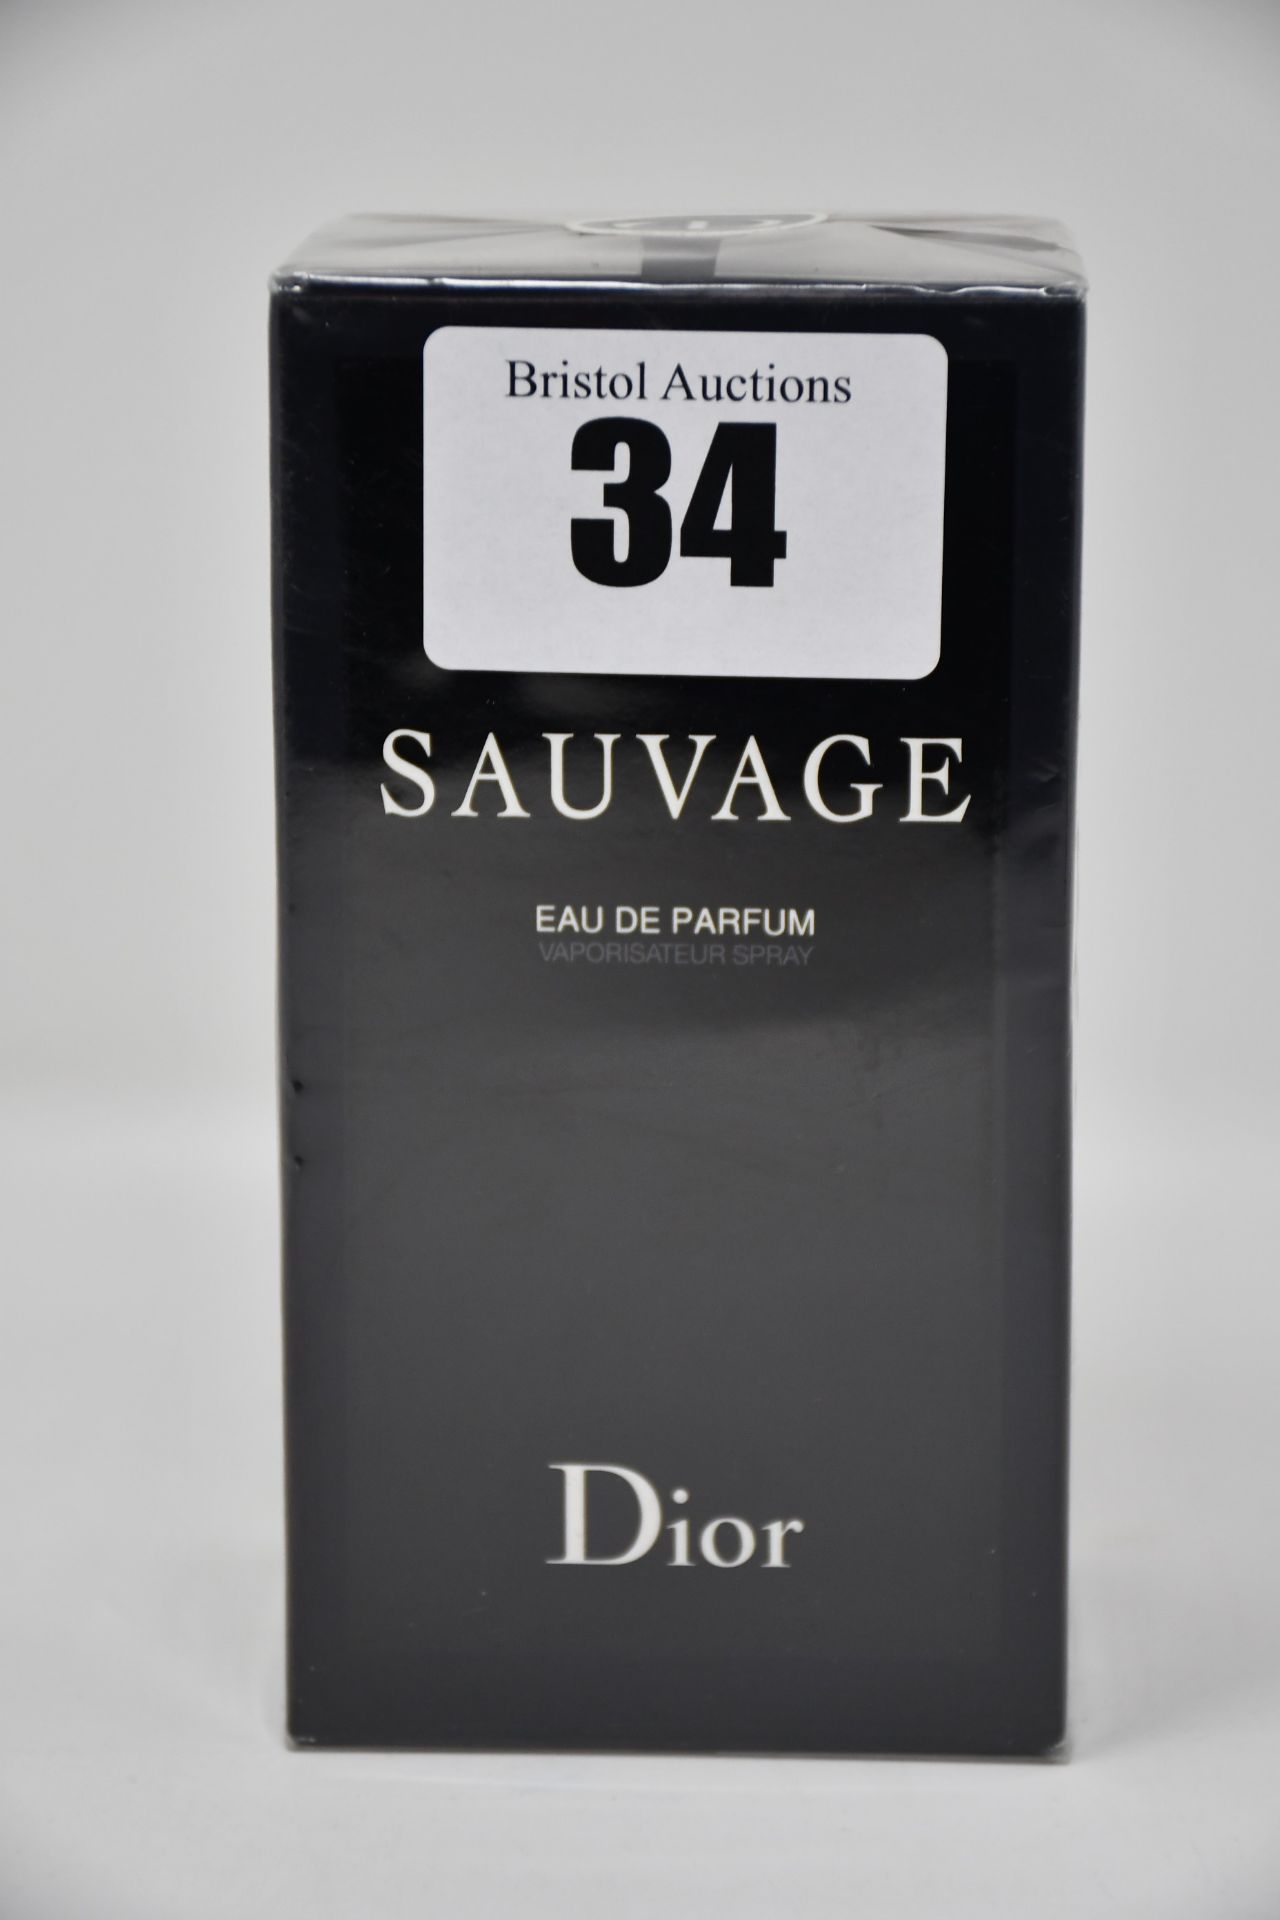 Two Dior Sauvage eau de parfum (60ml).